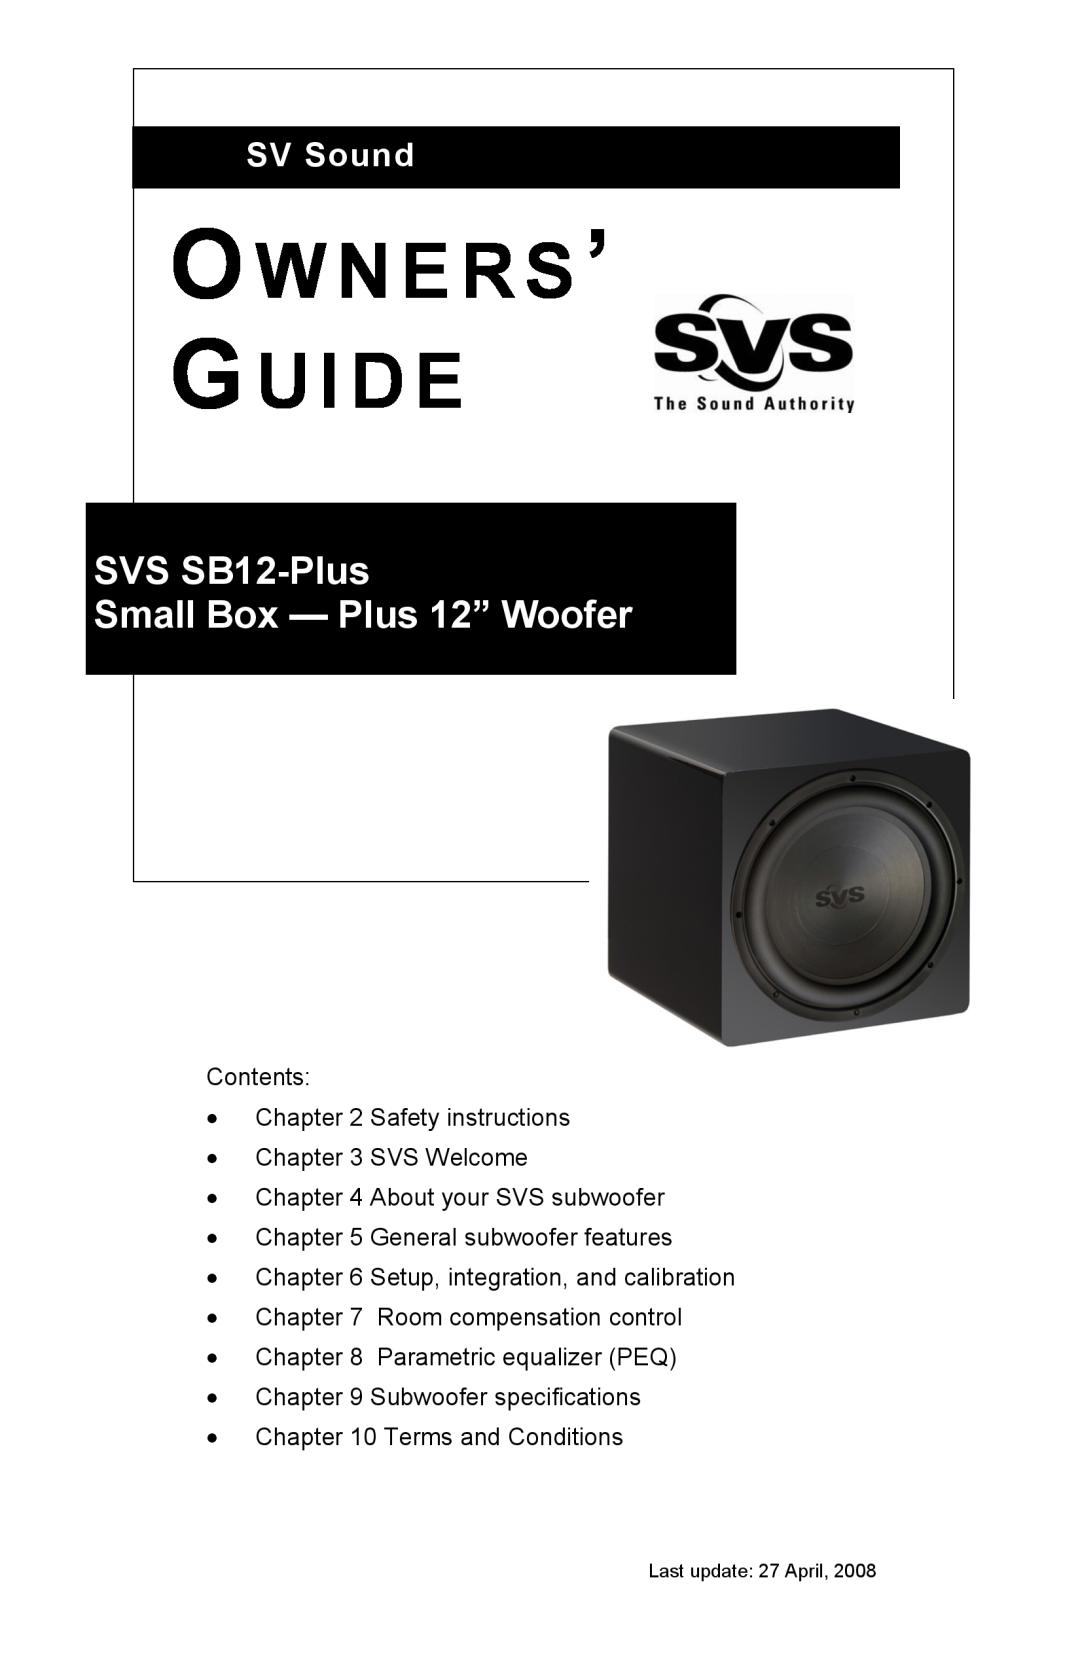 SV Sound specifications O W N E R S ’ G U I D E, SVS SB12-Plus Small Box - Plus 12” Woofer, SV Sound 